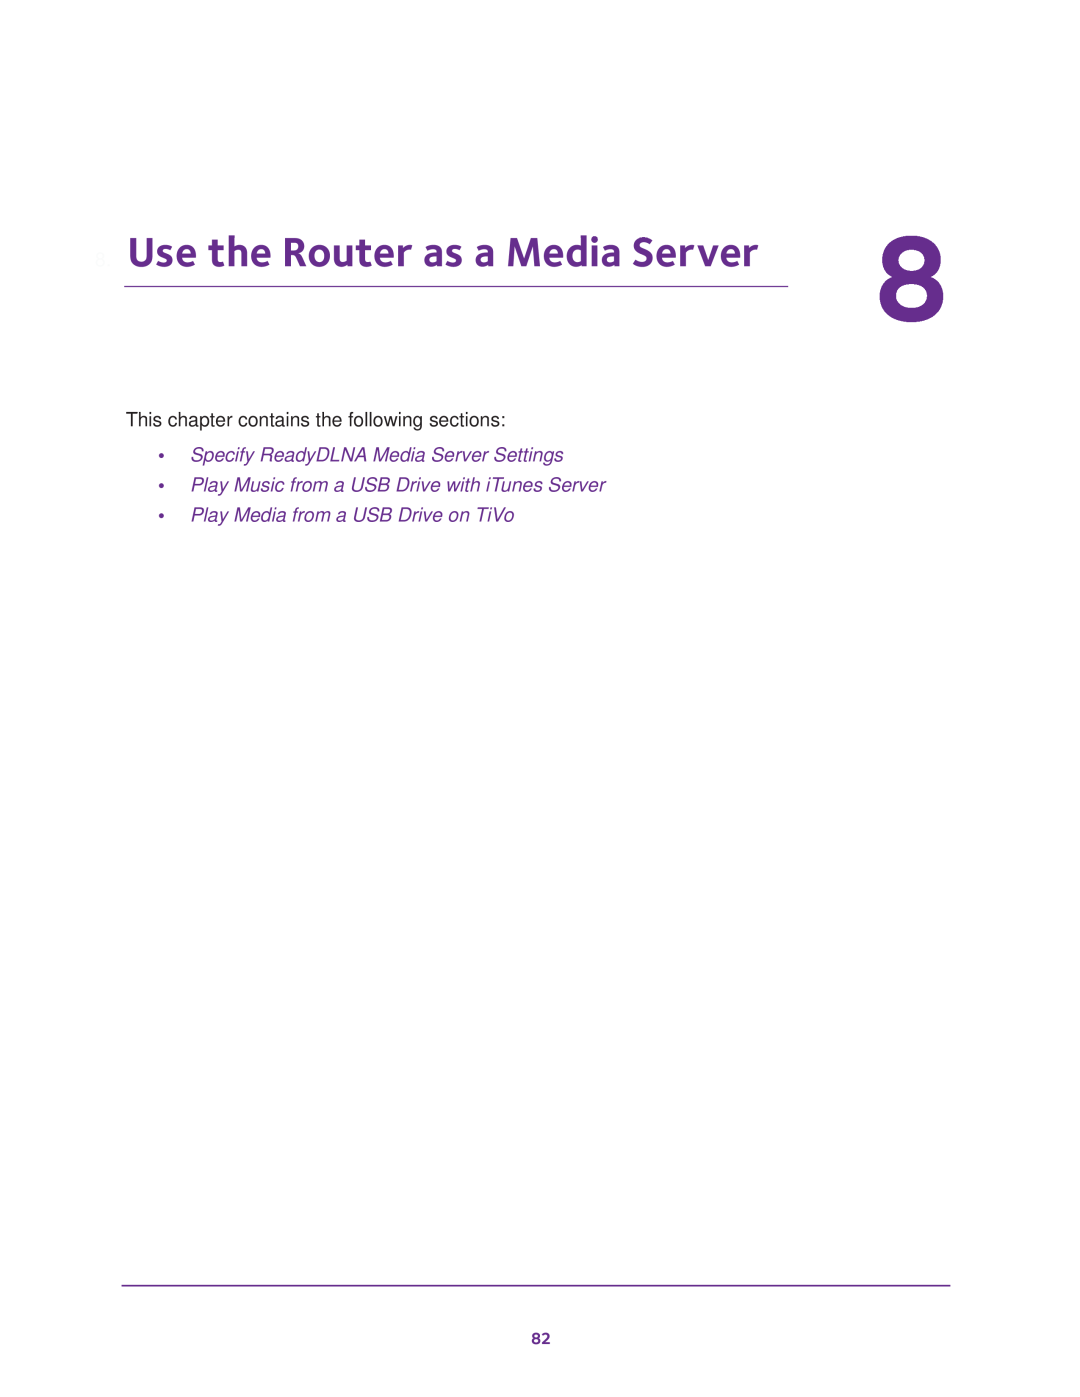 NETGEAR Model R7000 user manual Use the Router as a Media Server, Specify ReadyDLNA Media Server Settings 